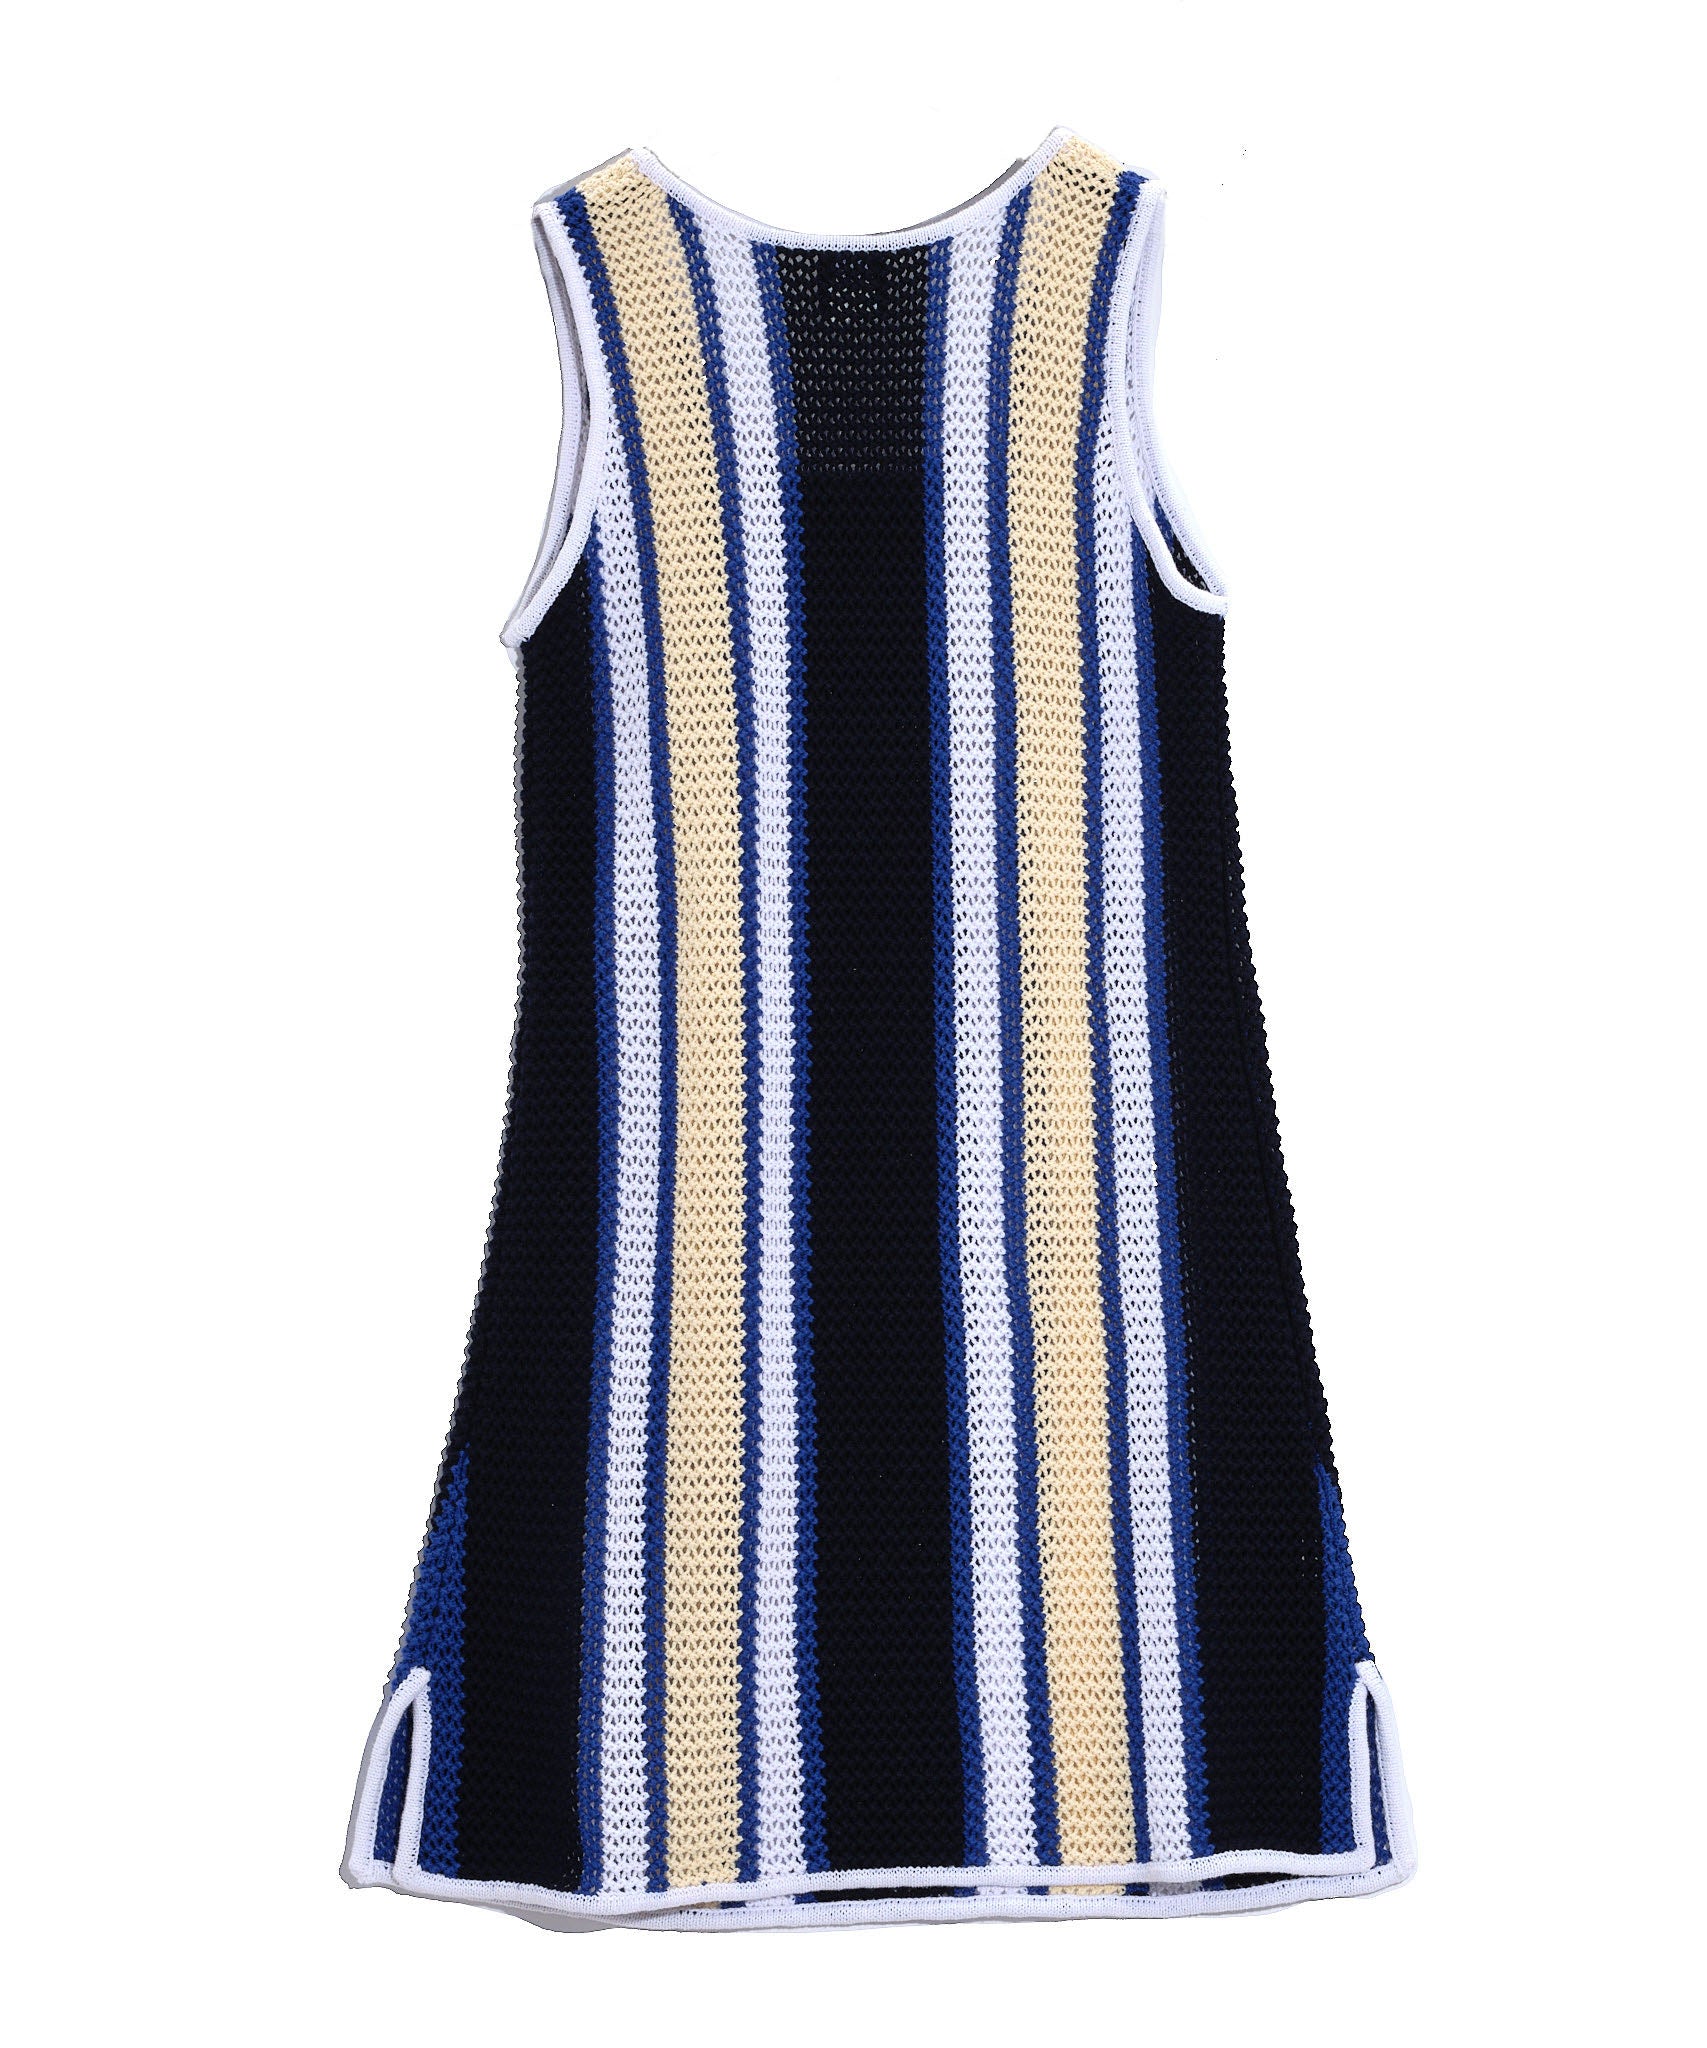 Adirondack Stripe Dress in color Navy